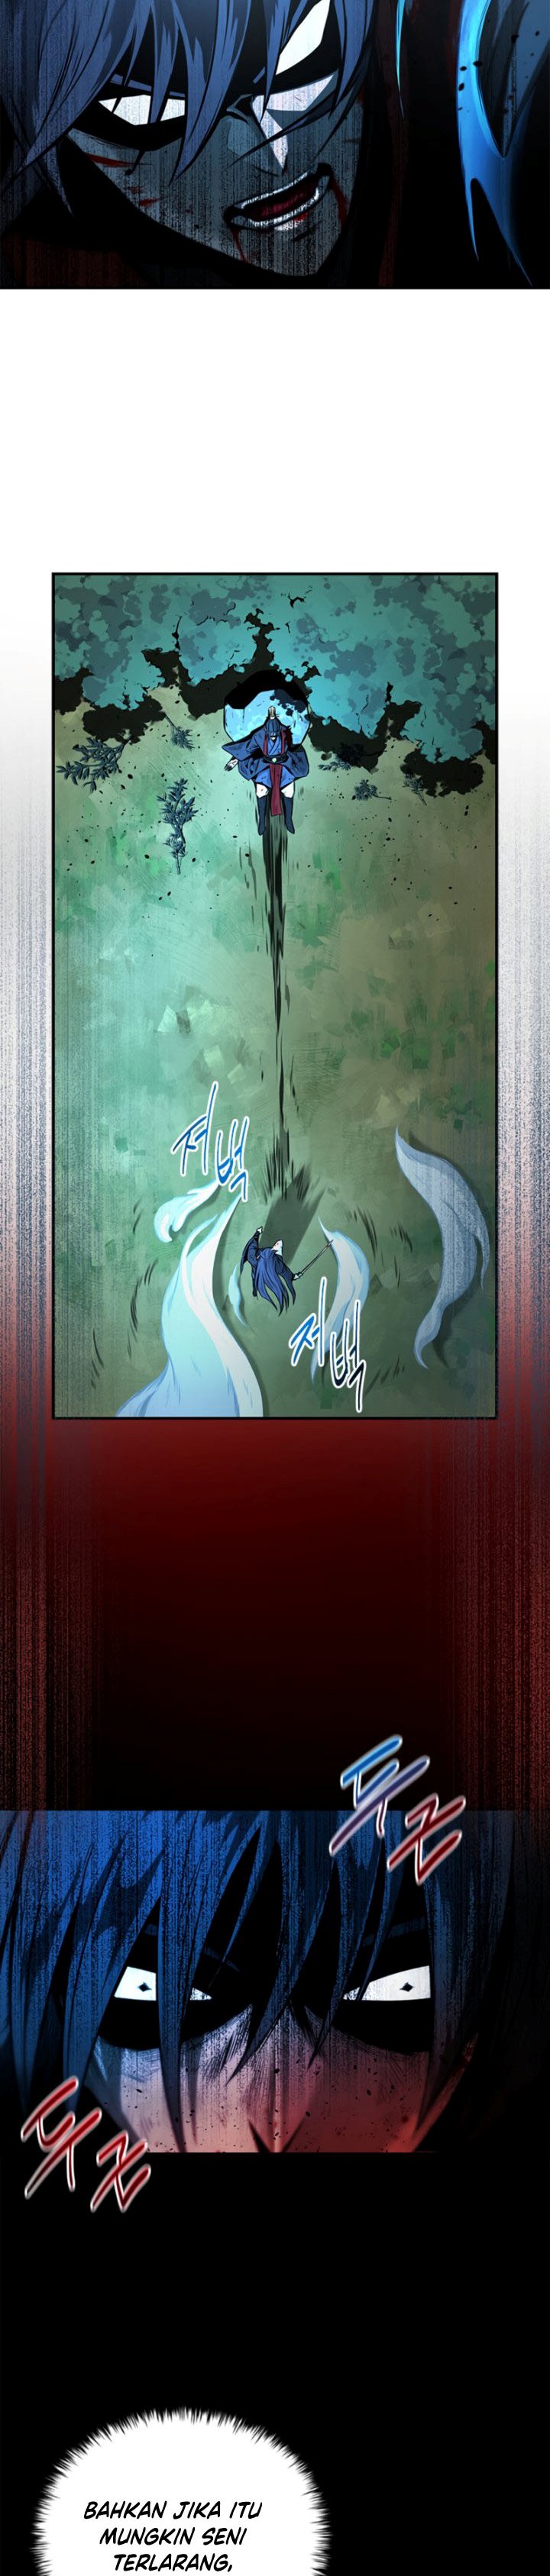 Moon-Shadow Sword Emperor Chapter 01 Image 39